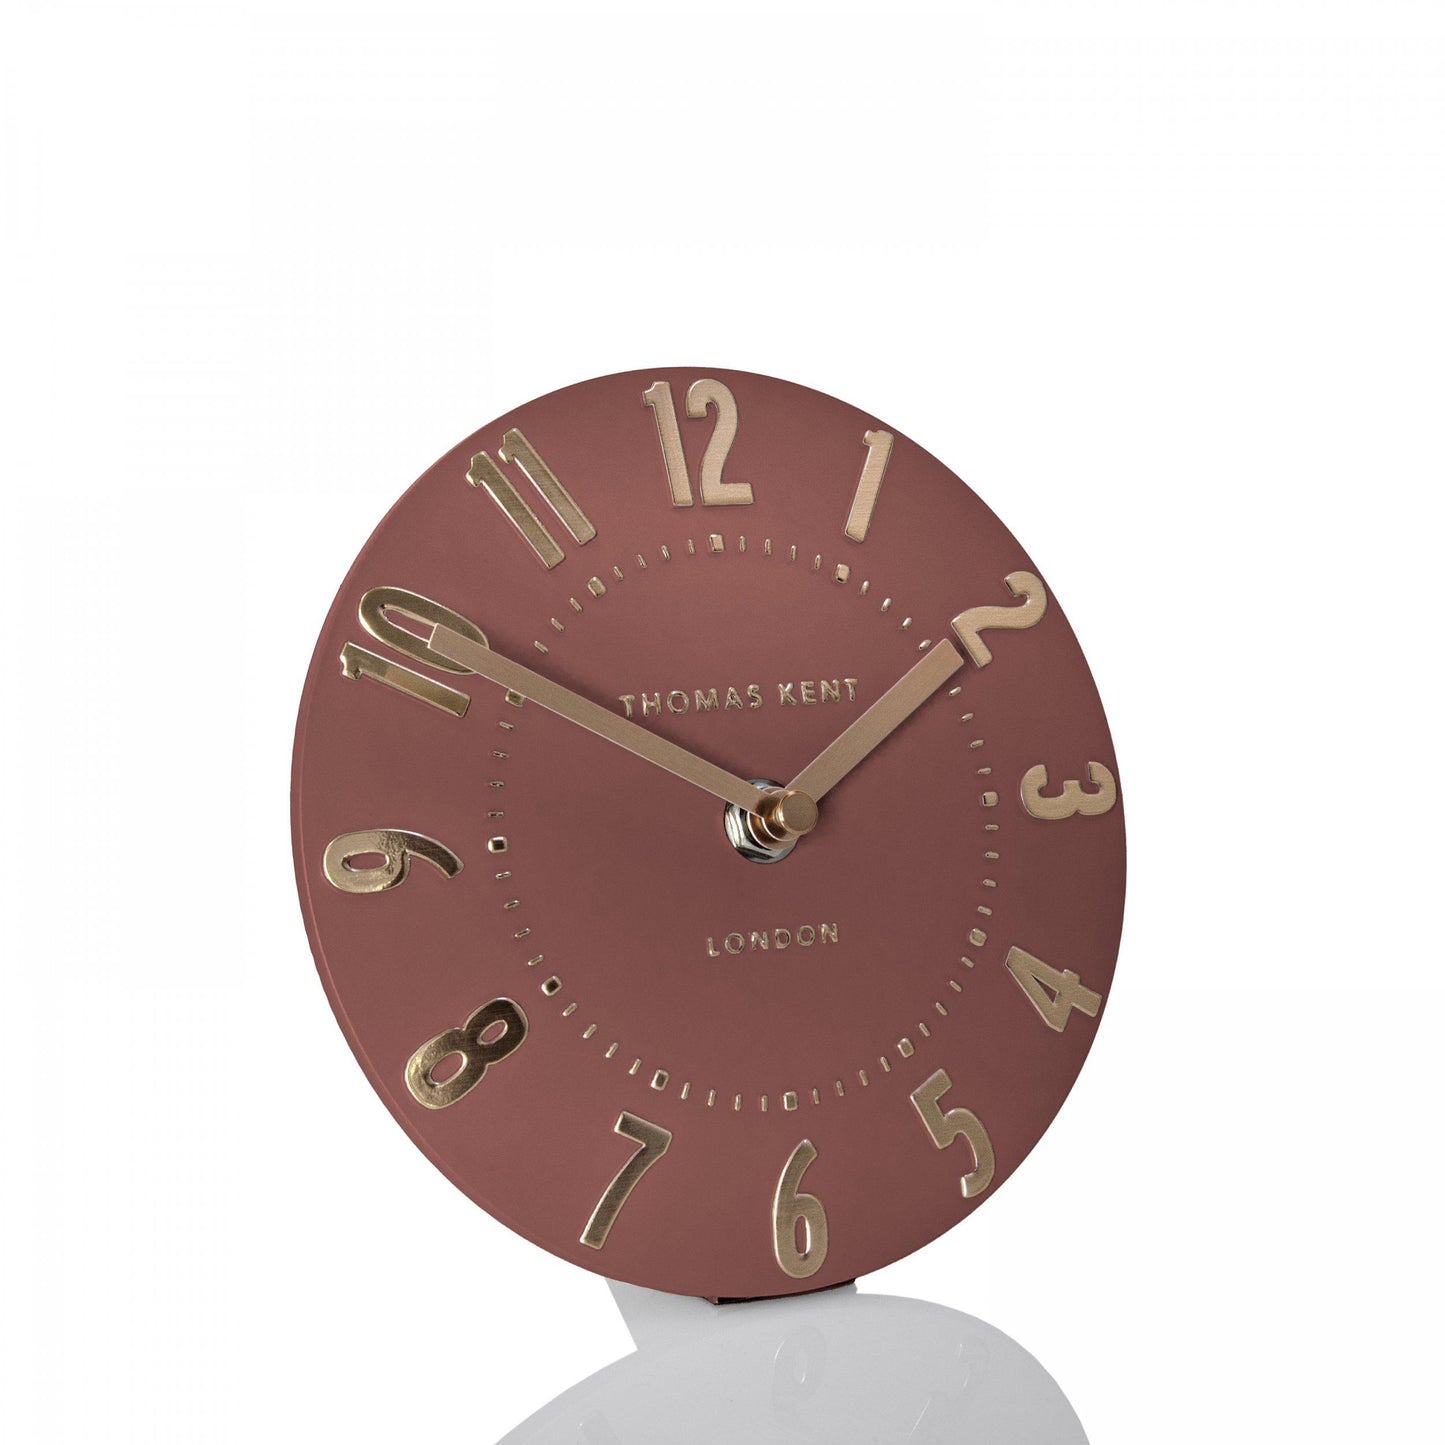 6" Auburn Mulberry Mantle Clock